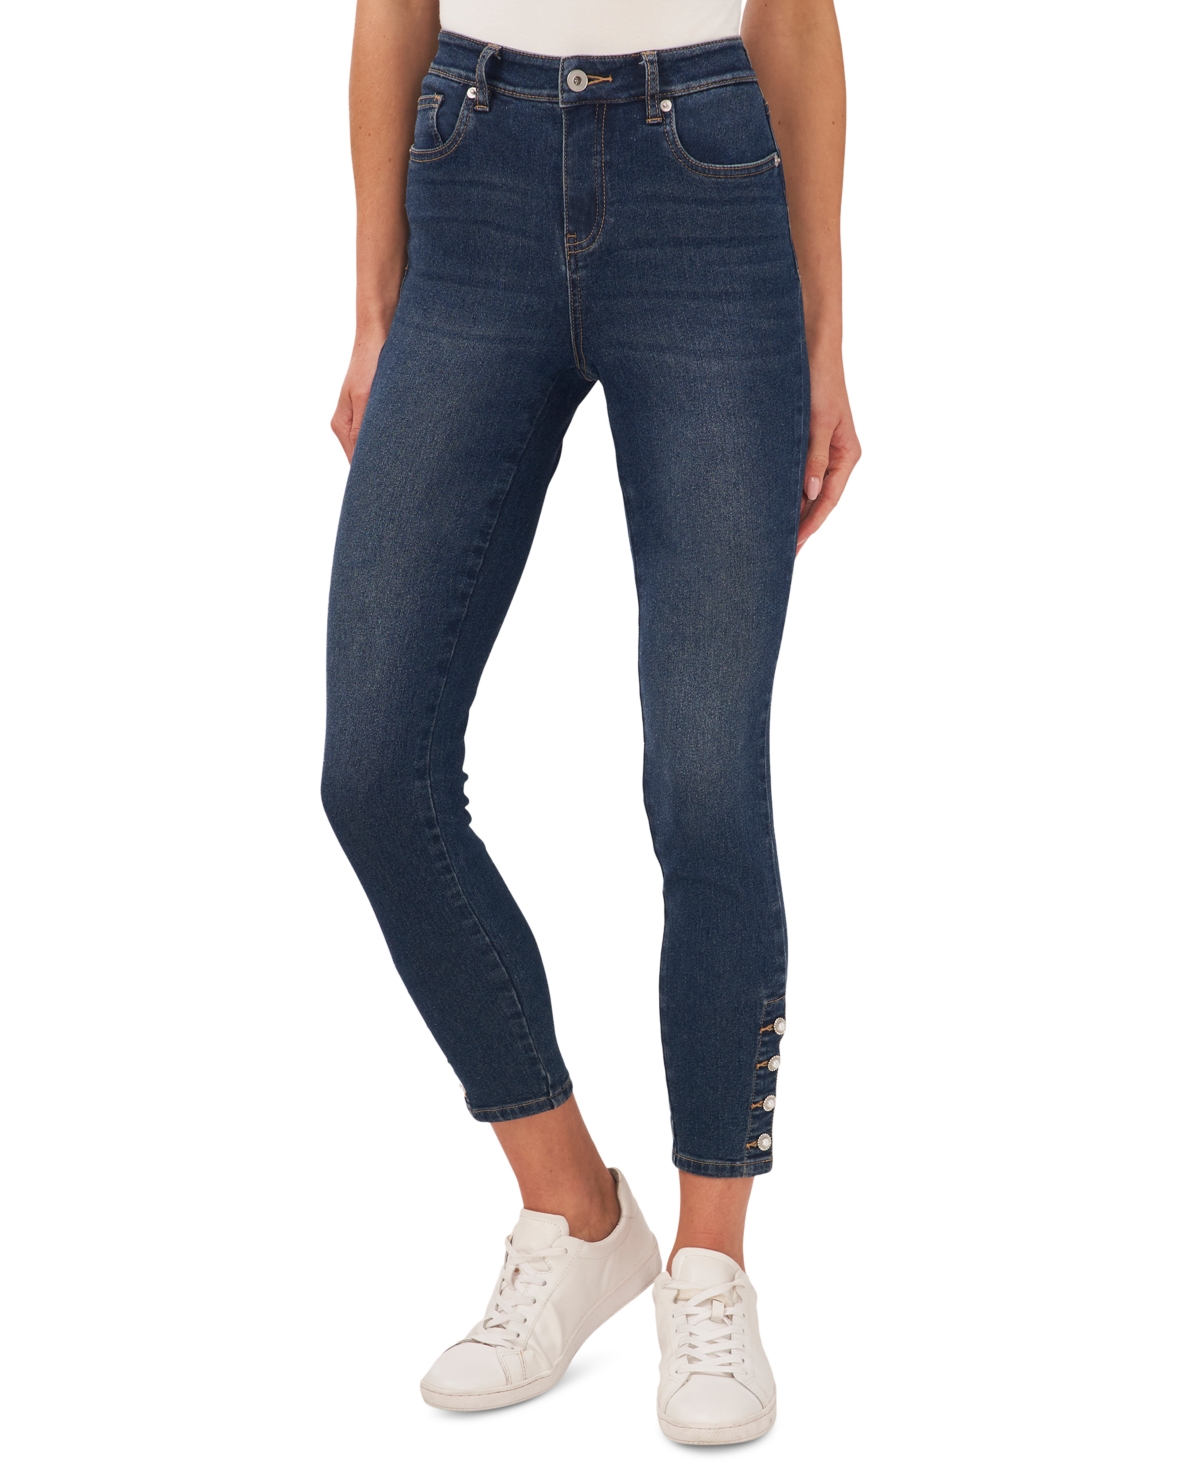  CeCe Women's Imitation-Pearl-Trim Skinny Jeans